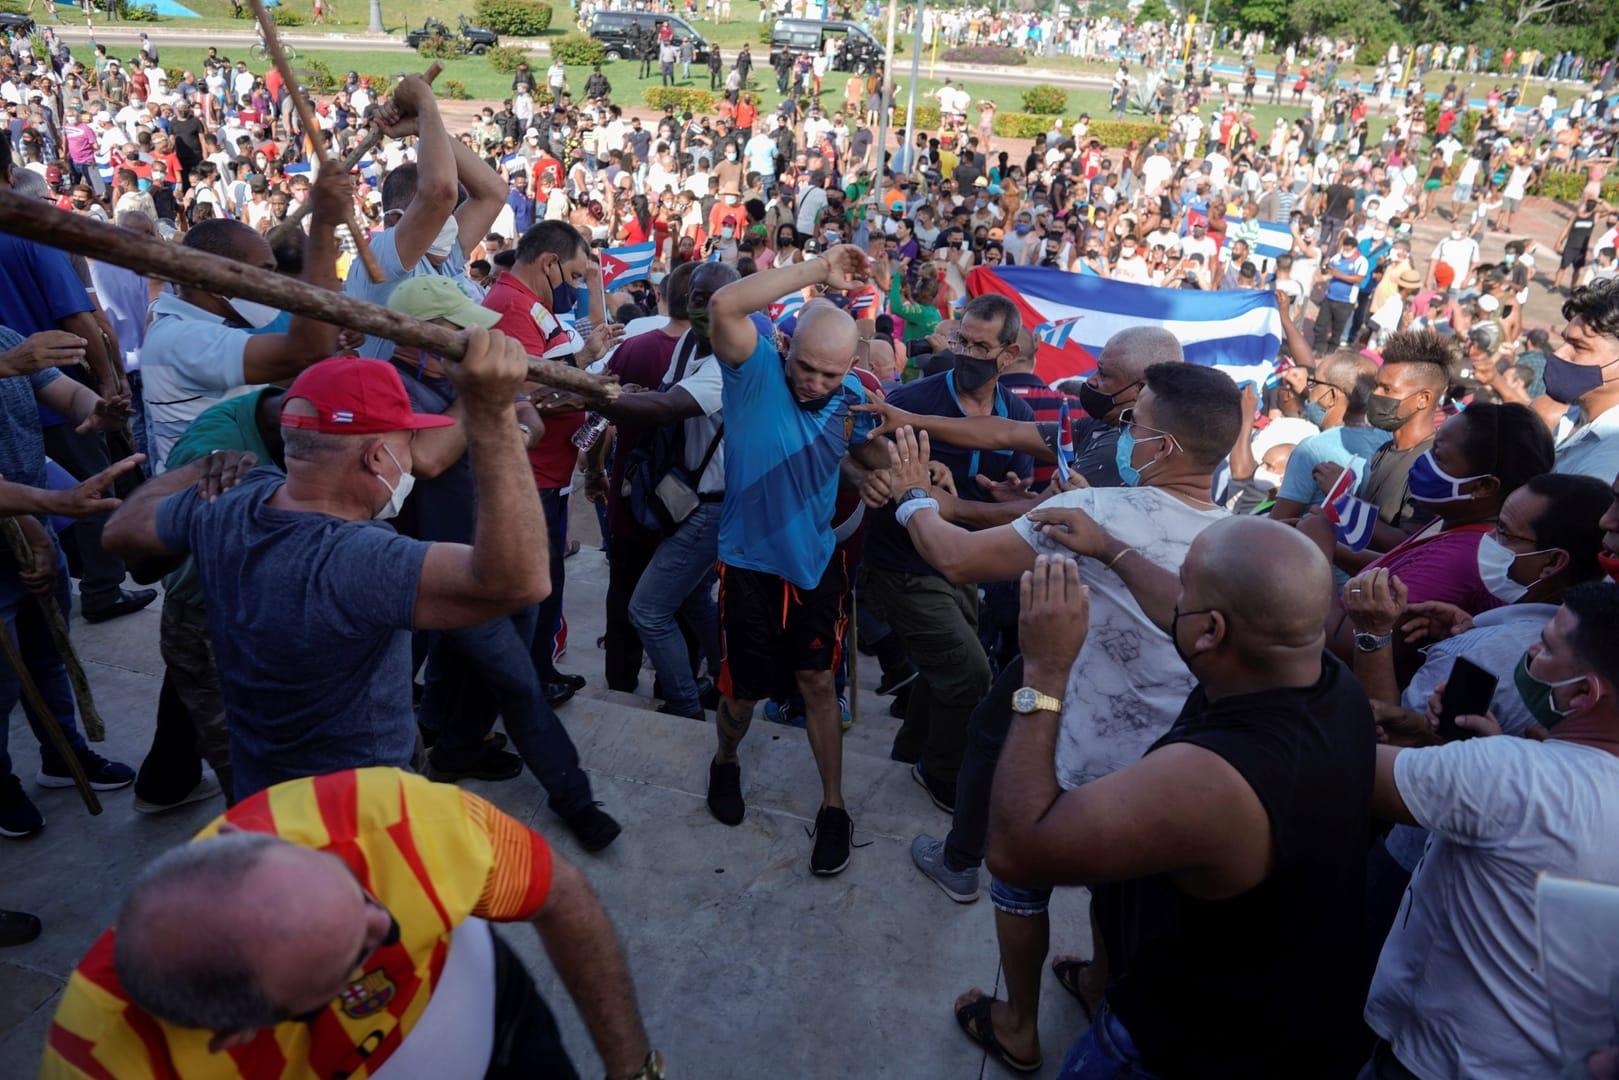 ‘Enough is enough’ of how Cuba treats its people, Bishop Cruz says at vigil